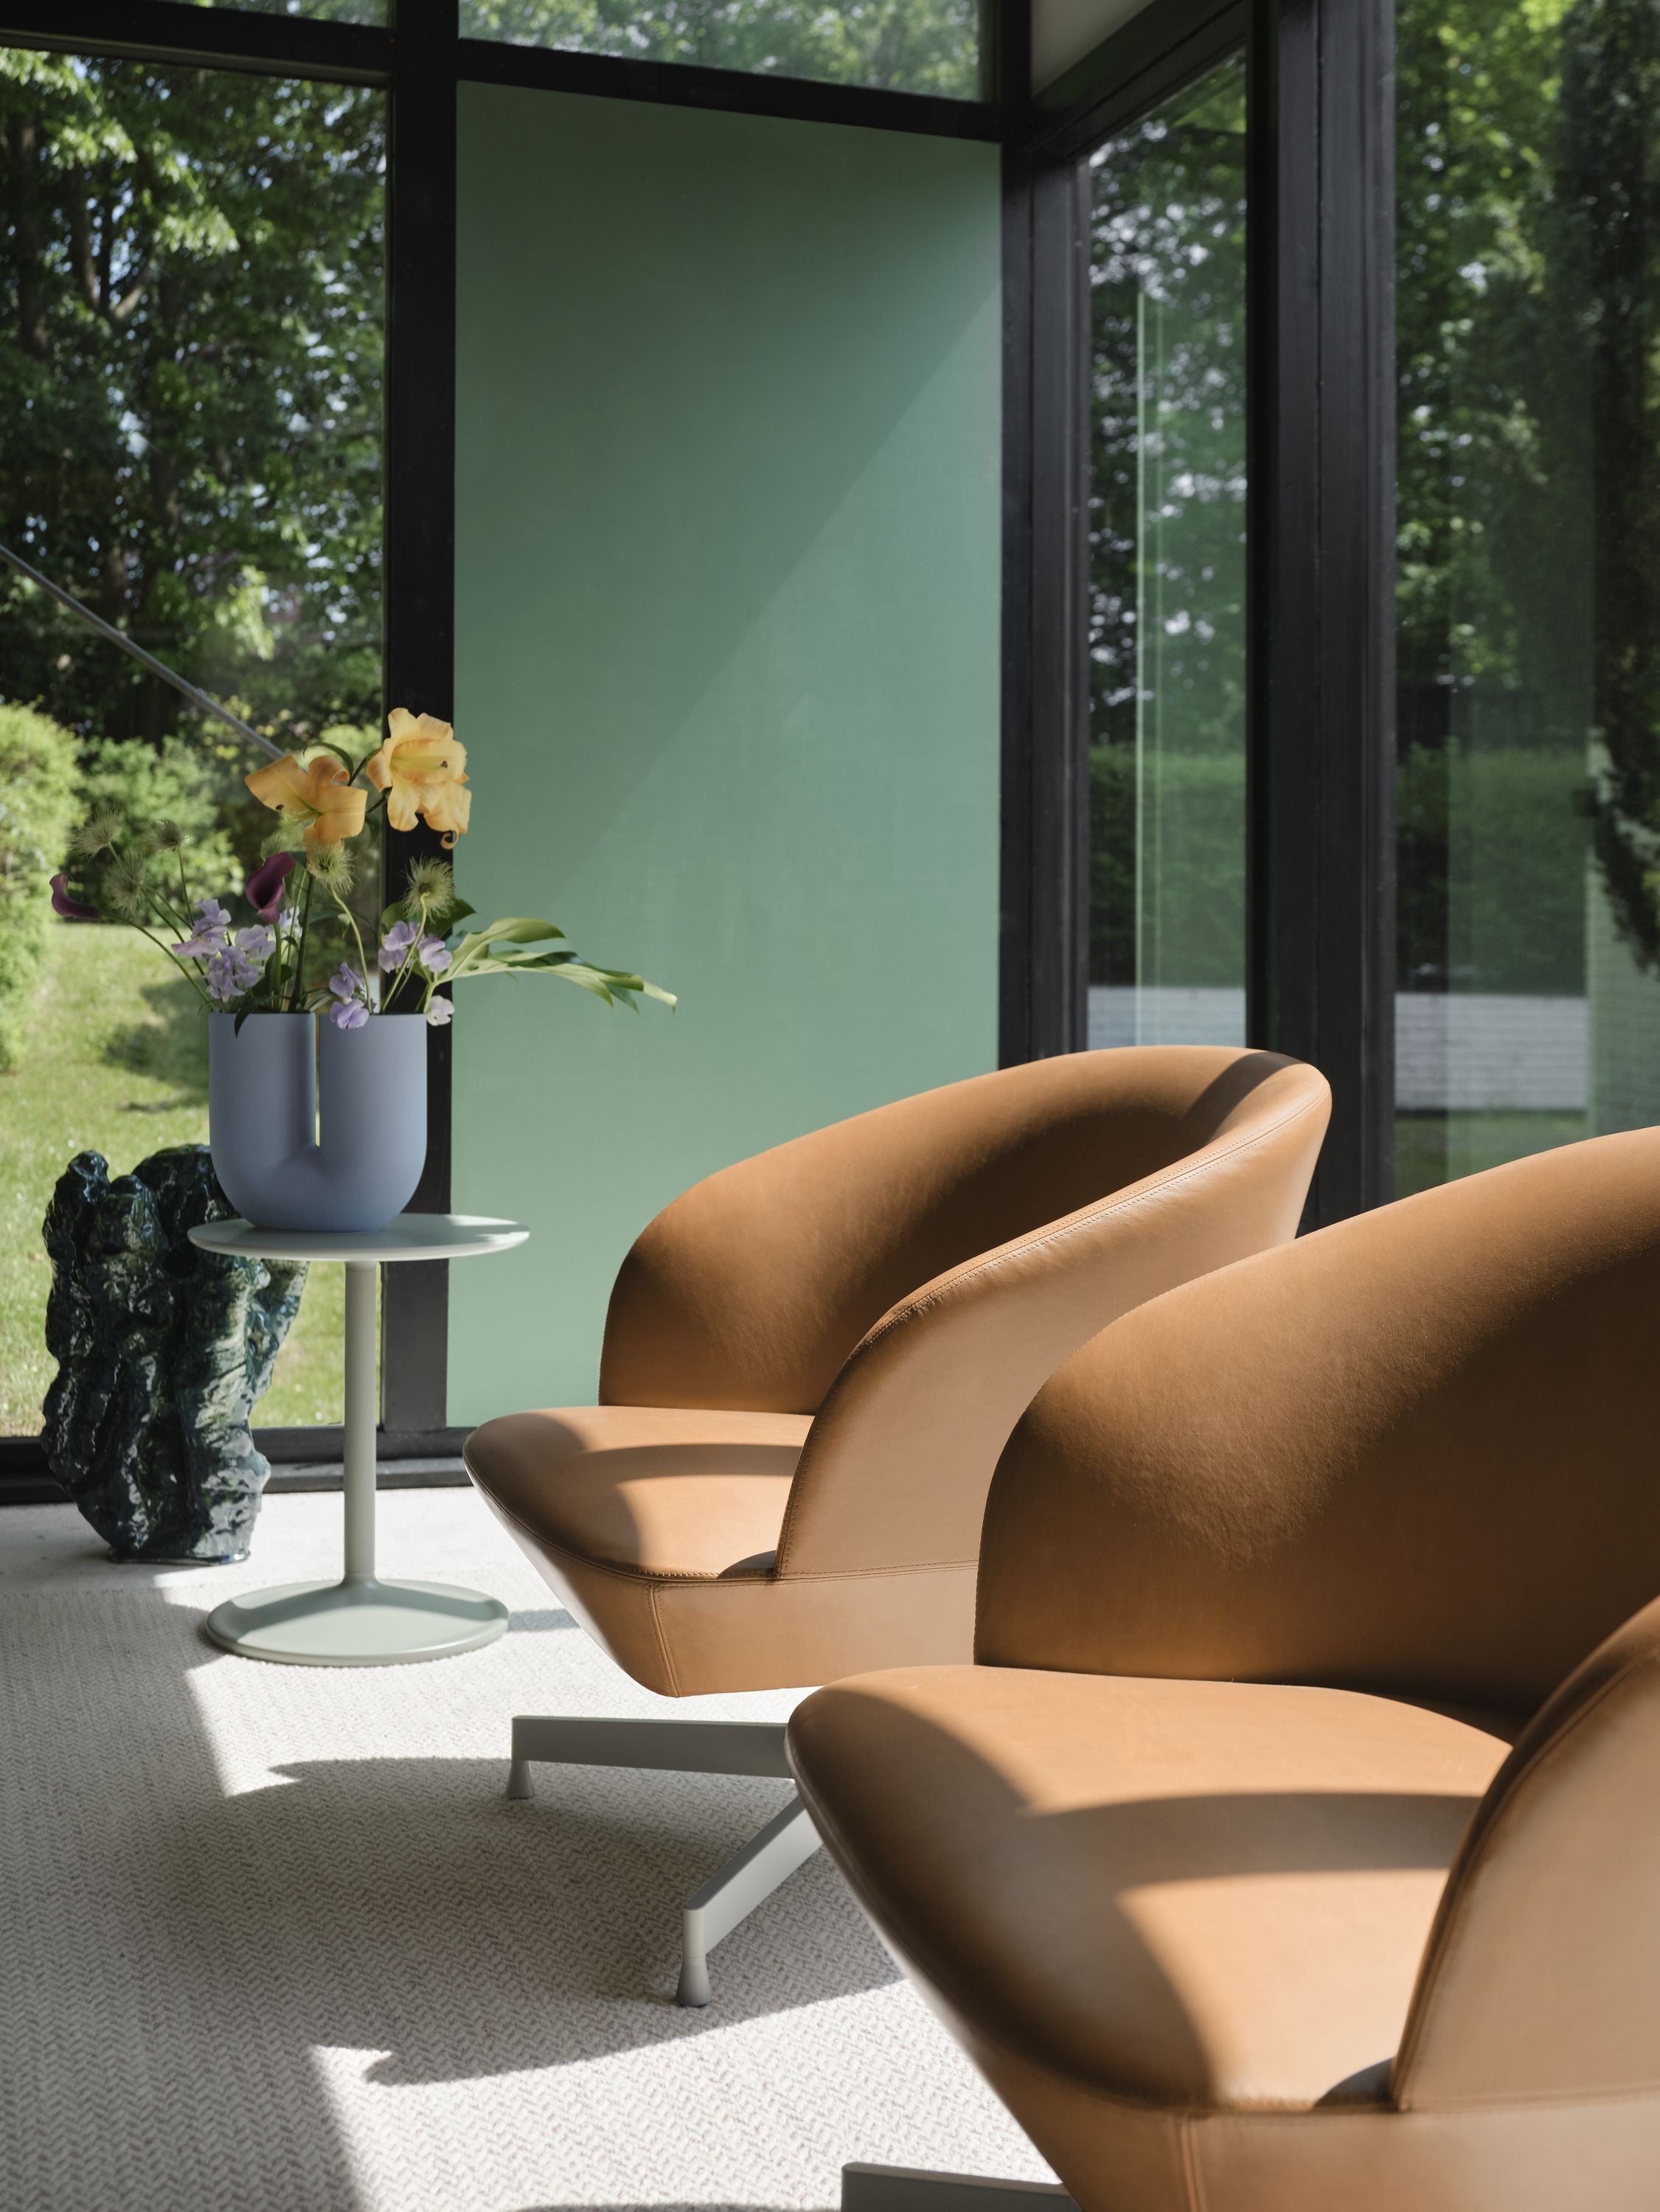 Muuto Oslo Lounge Chair Refine Leather, Cognac